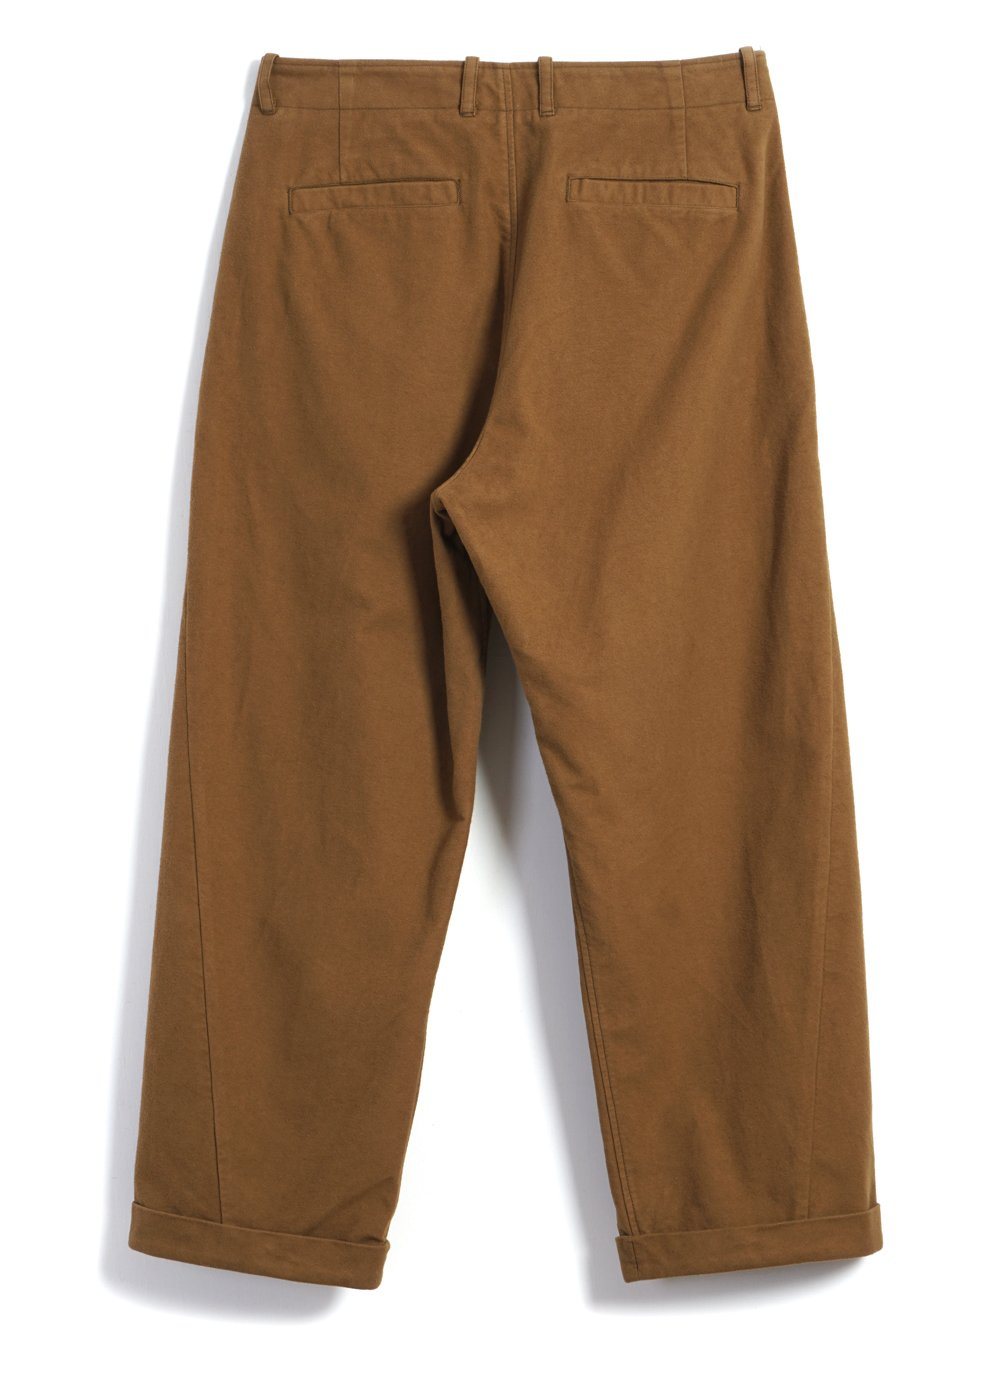 HANSEN GARMENTS - BOBBY | Super Wide Pleated Trousers | Turmeric - HANSEN Garments